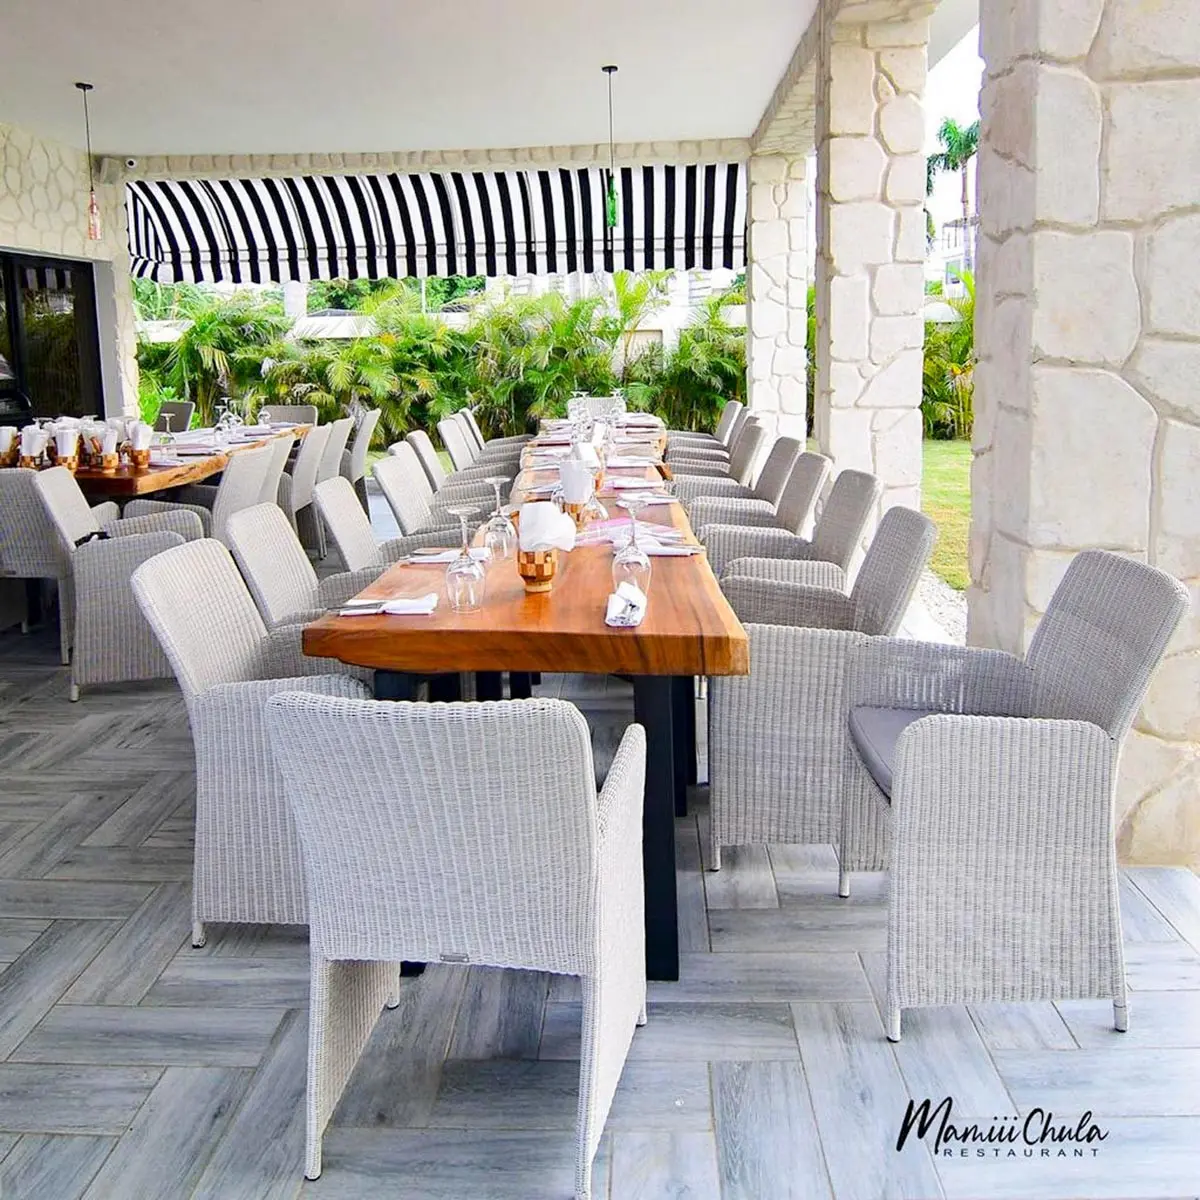 Tables on the terrace at Mamiii Chula Restaurant at Playa Palmera Beach Resort